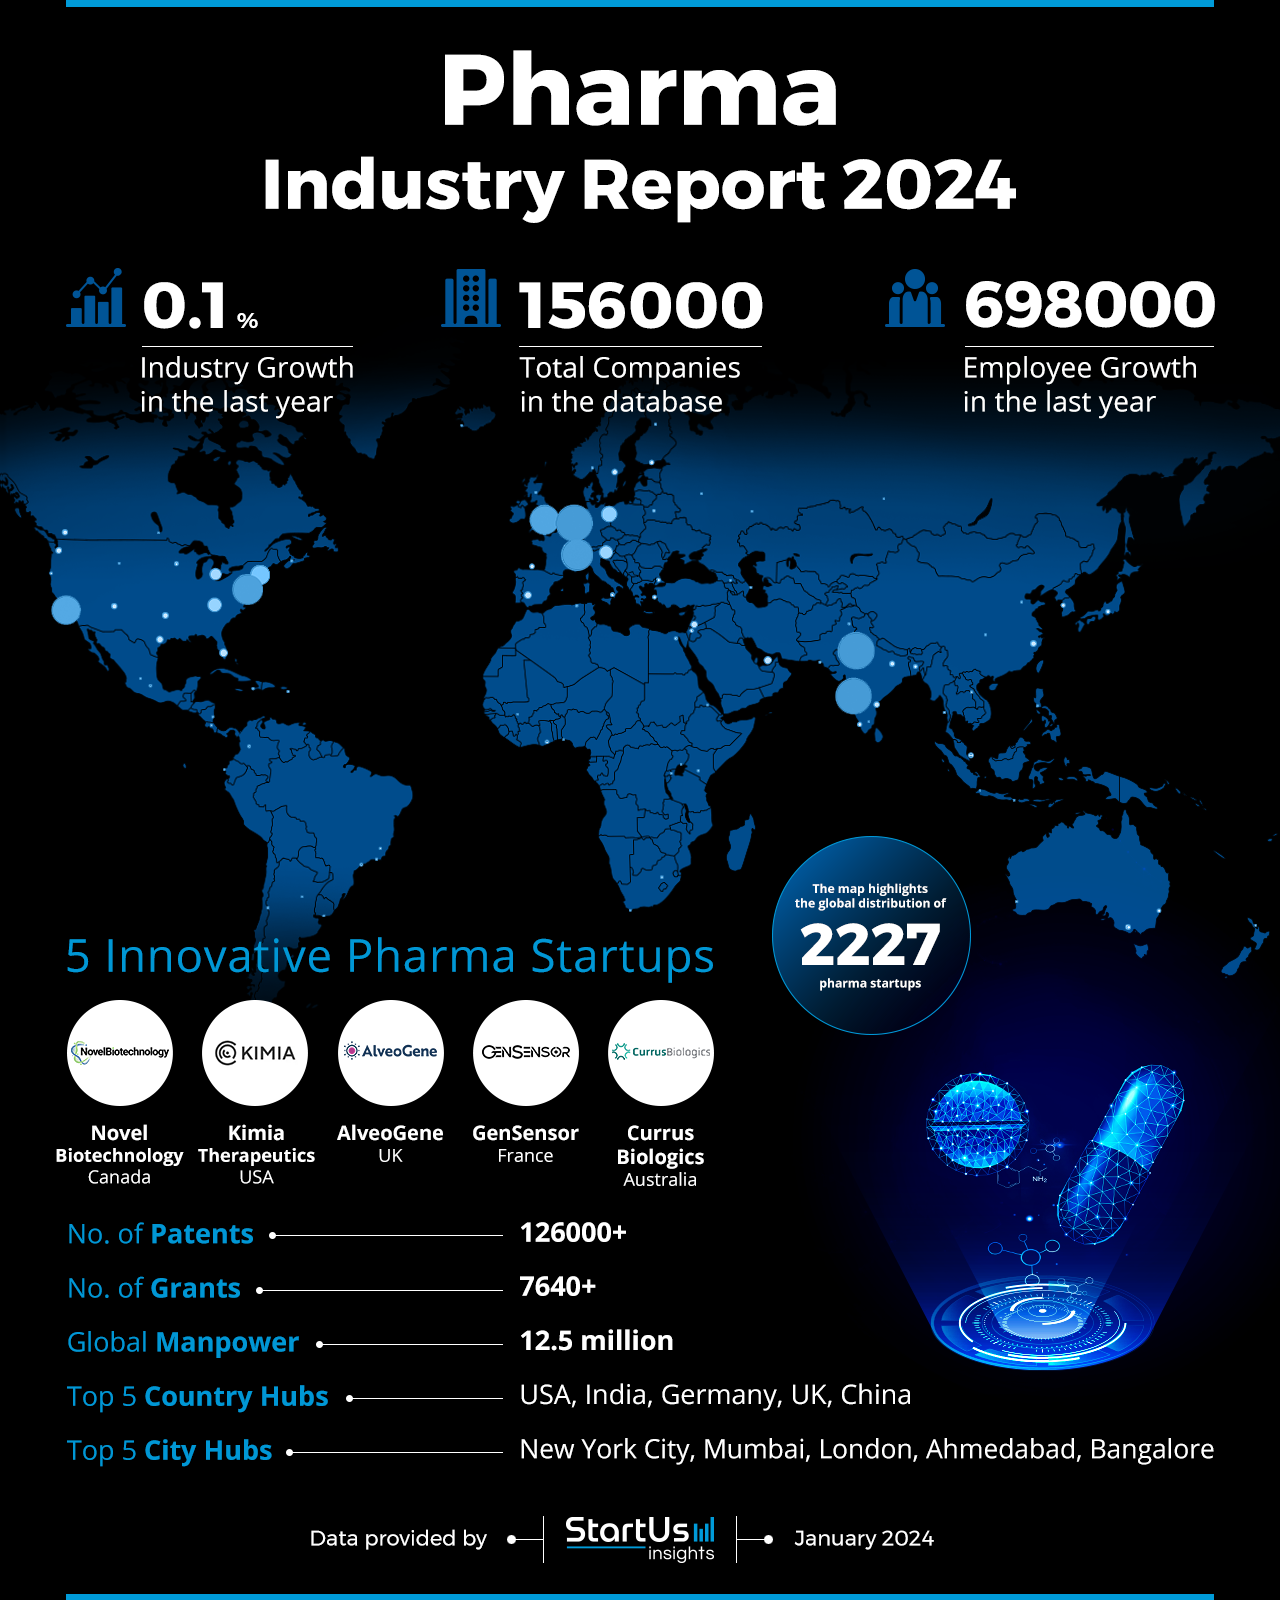 Pharma Industry Report 2024 - StartUs Insights